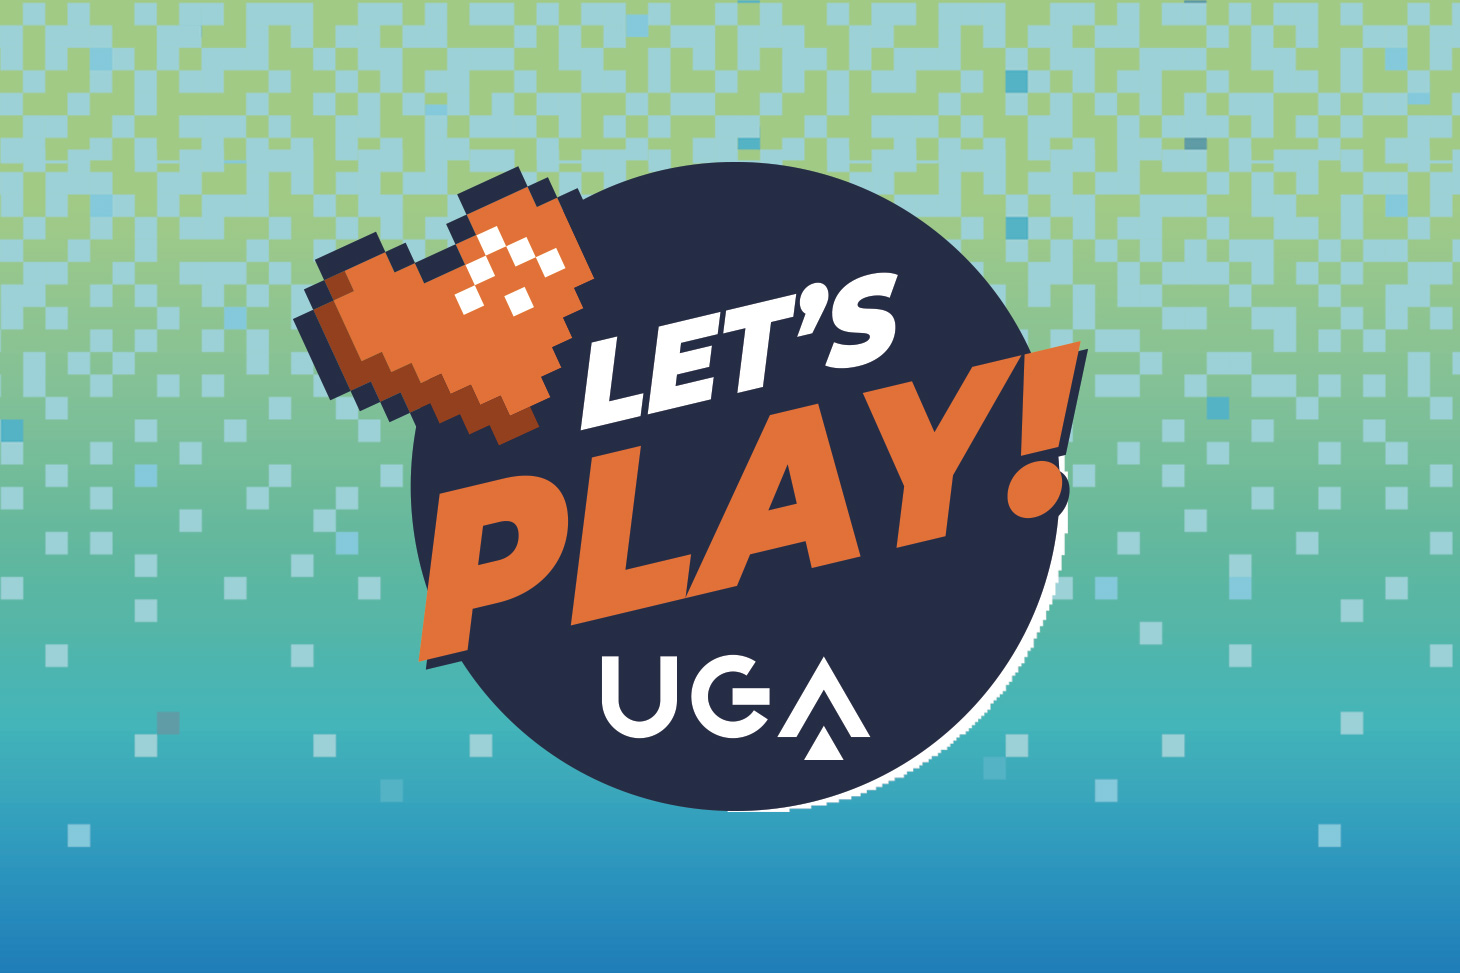 Let's play UGA